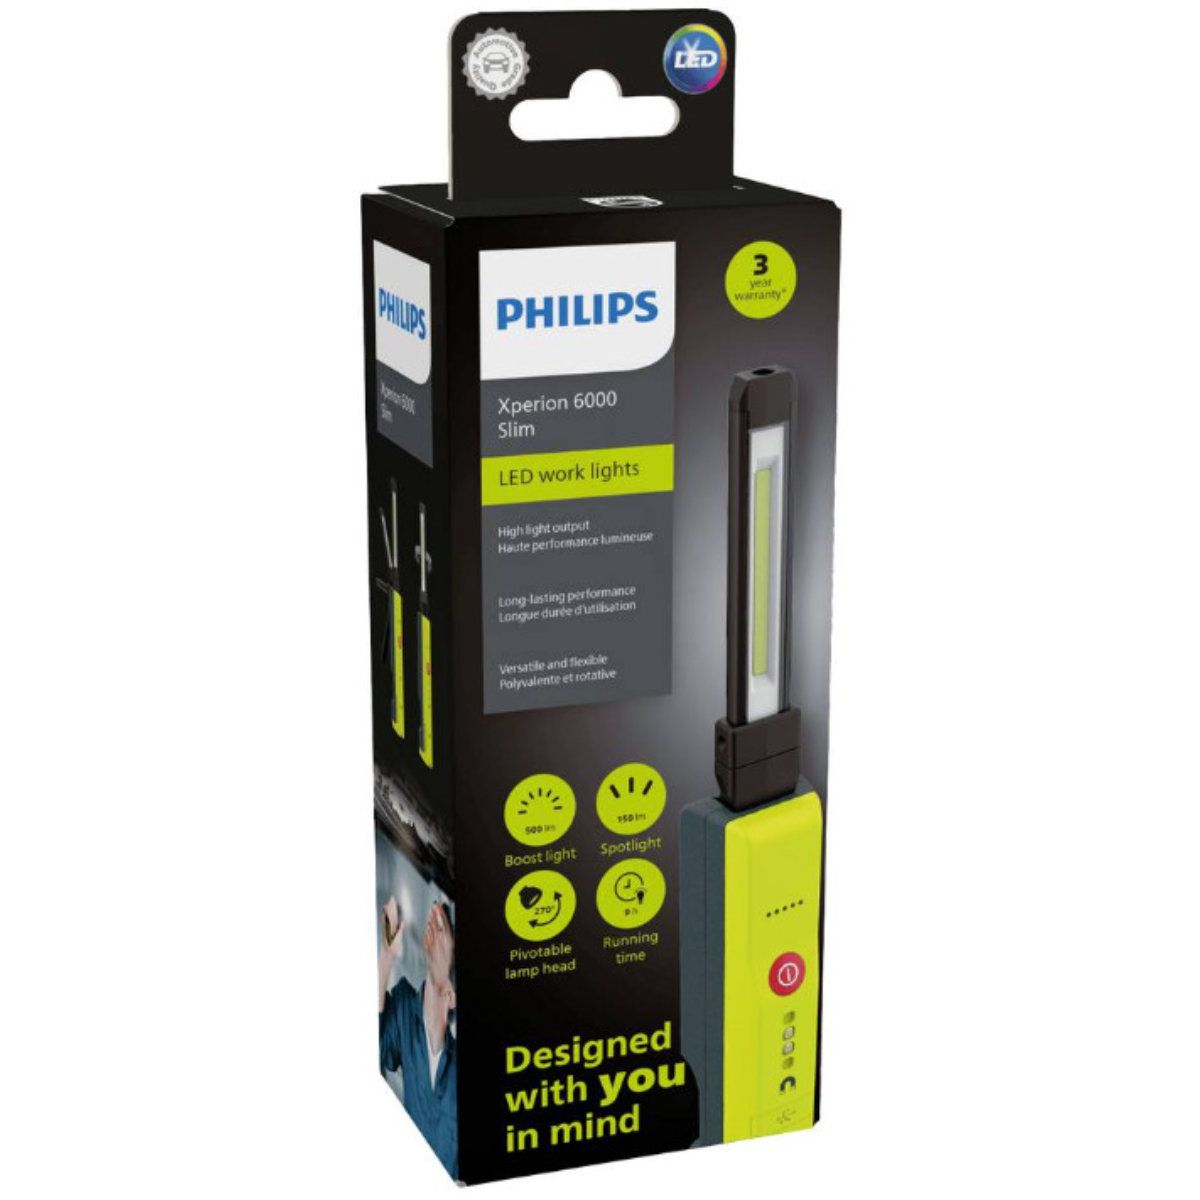 Philips Xperion 6000 Slim LED Werklamp | LED Werkverlichting | Vehicle Equipment Online Store